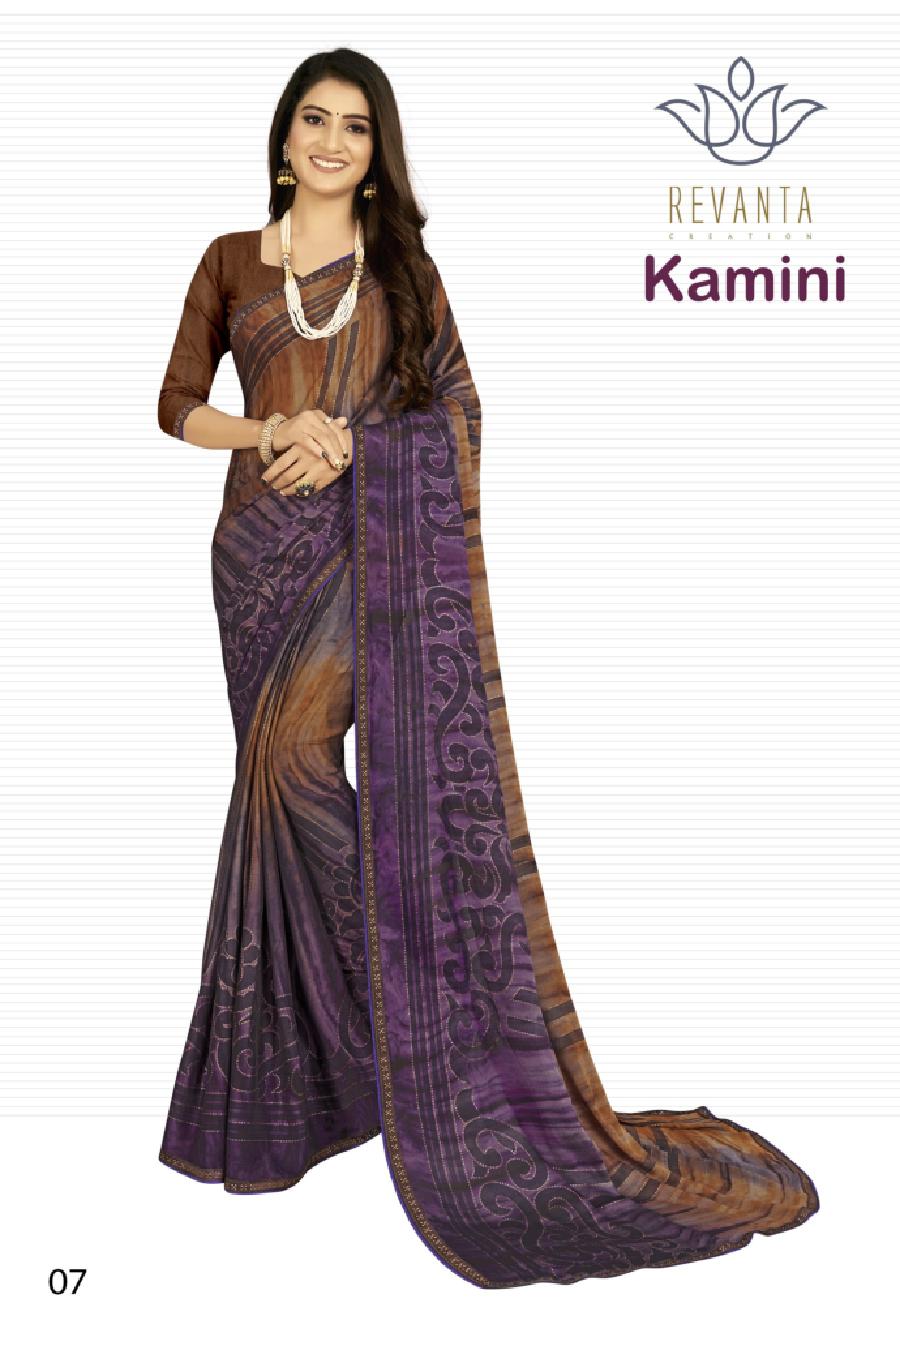 revanta kamini moss zari attrective print saree catalog